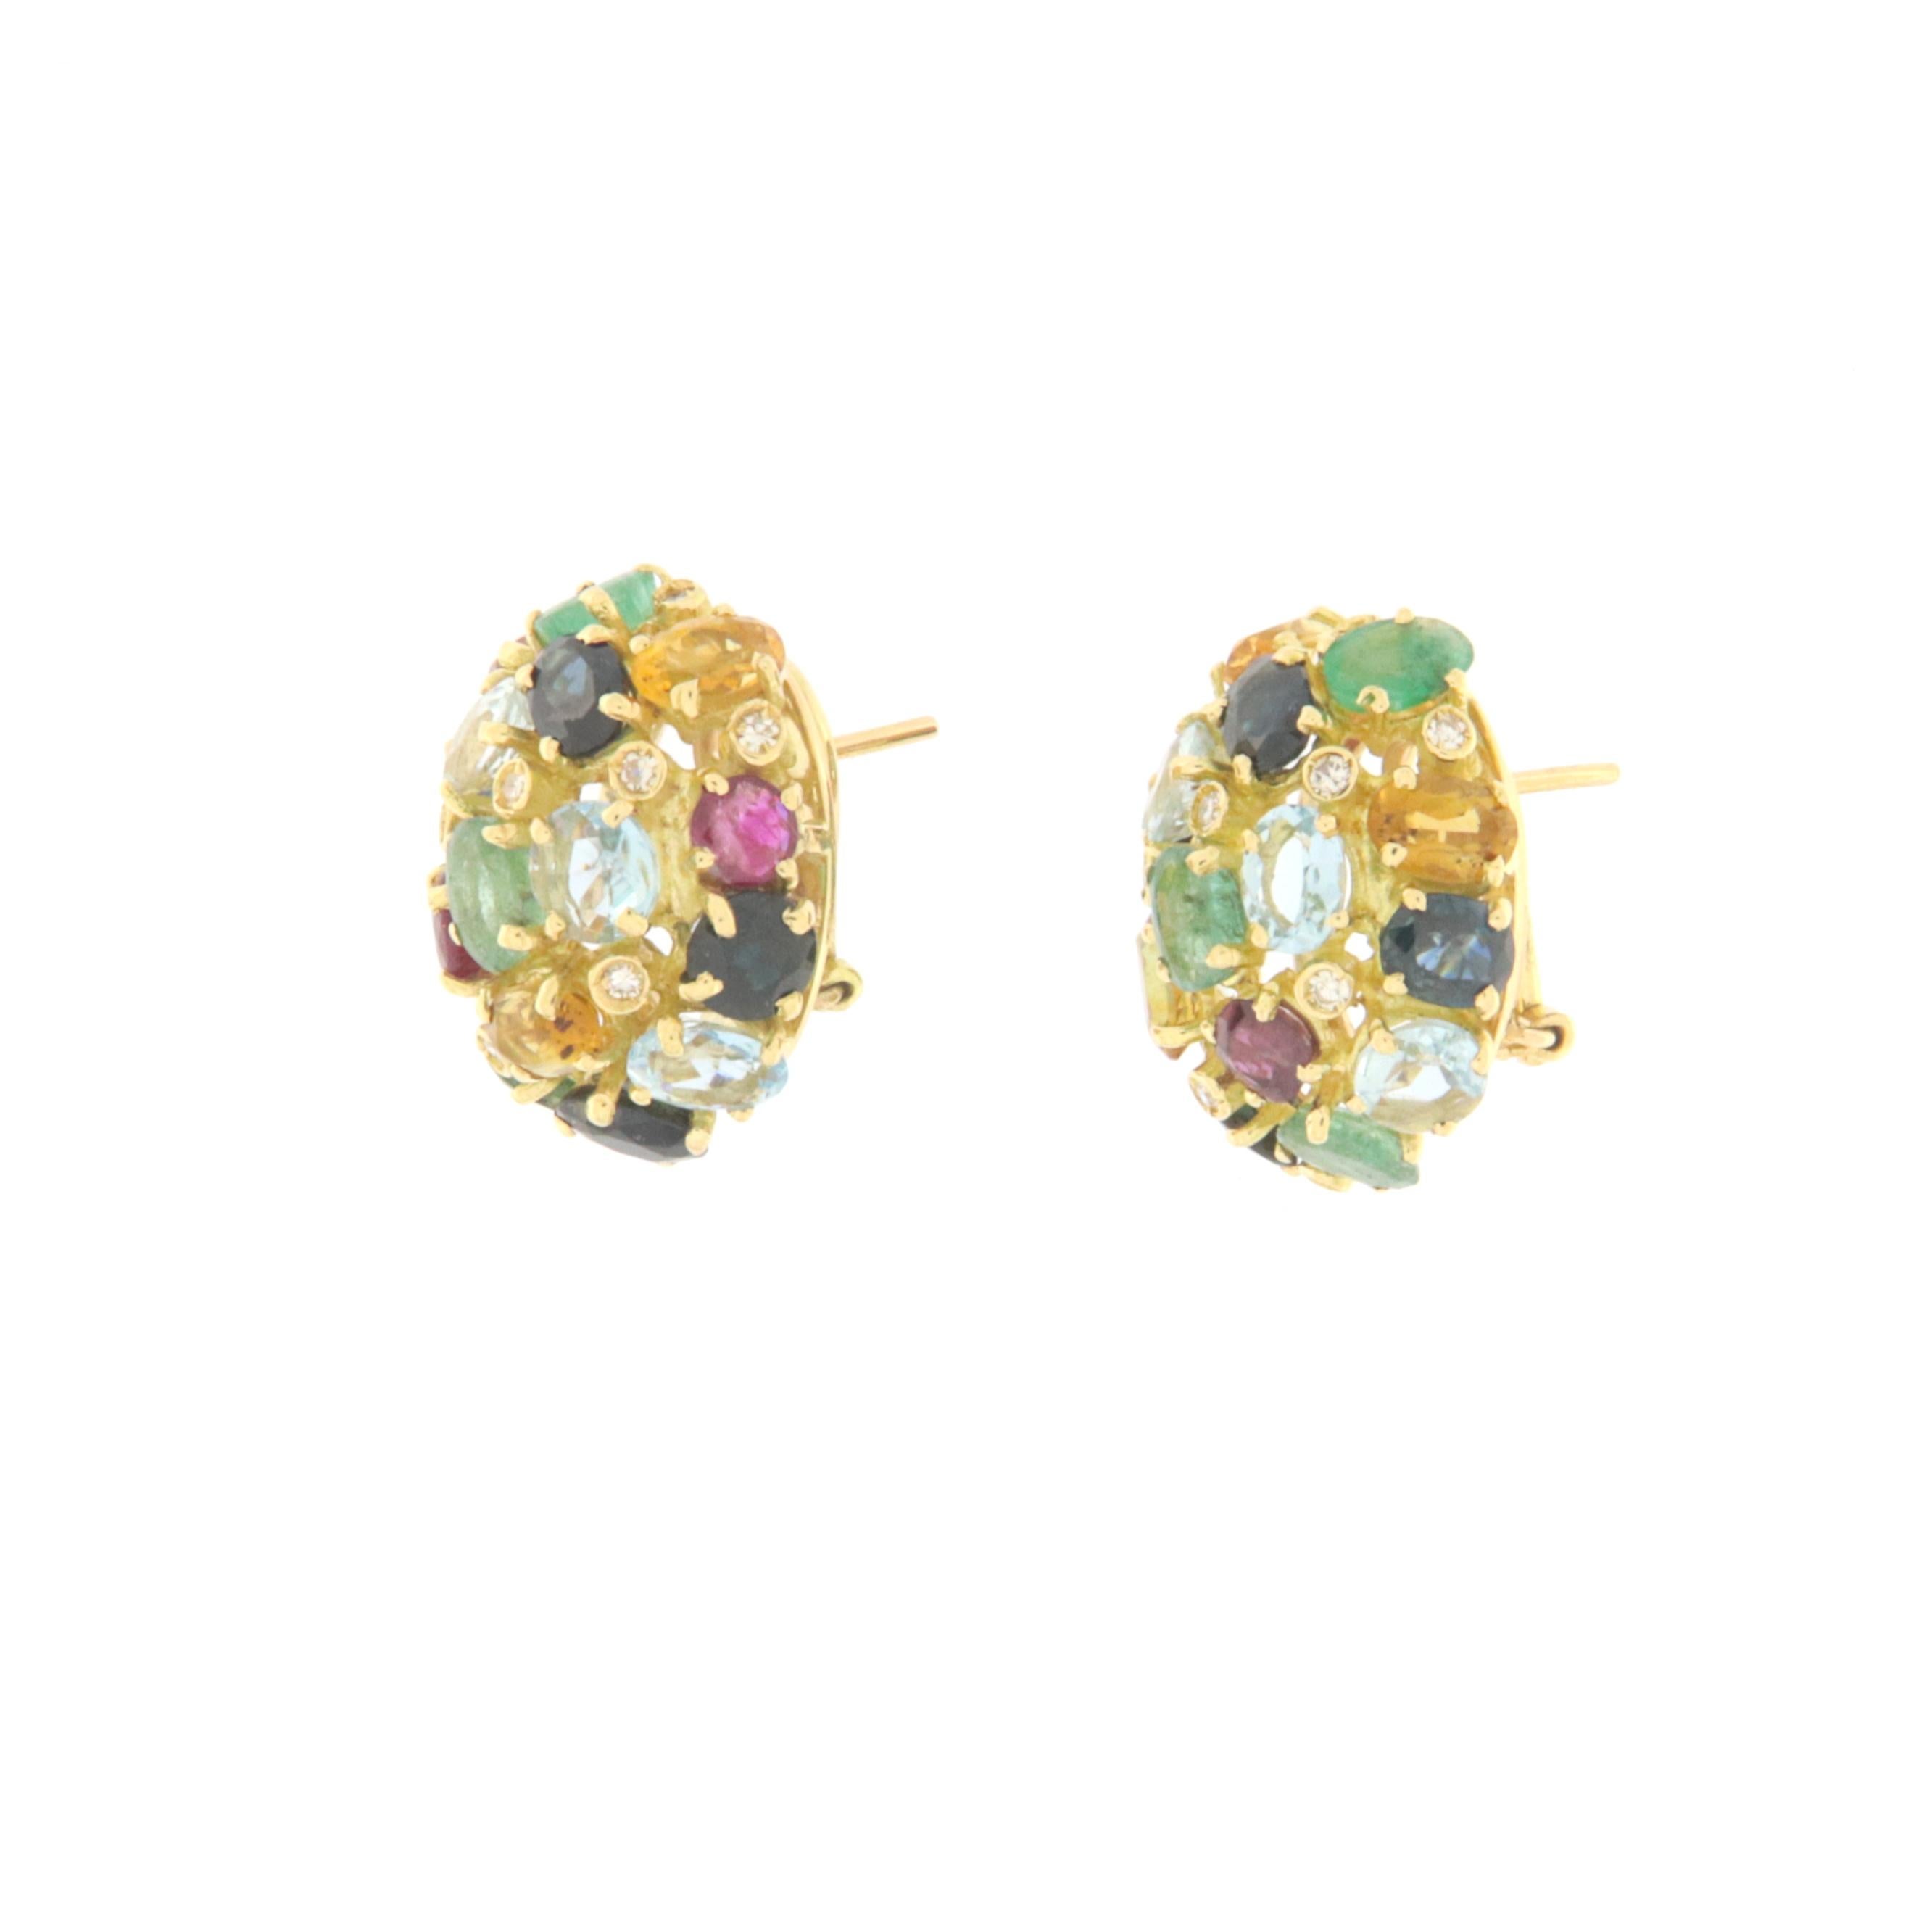 Brilliant Cut Sapphires Rubies Emeralds Aquamarine Diamonds 18 Karat Yellow Gold Stud Earrings For Sale